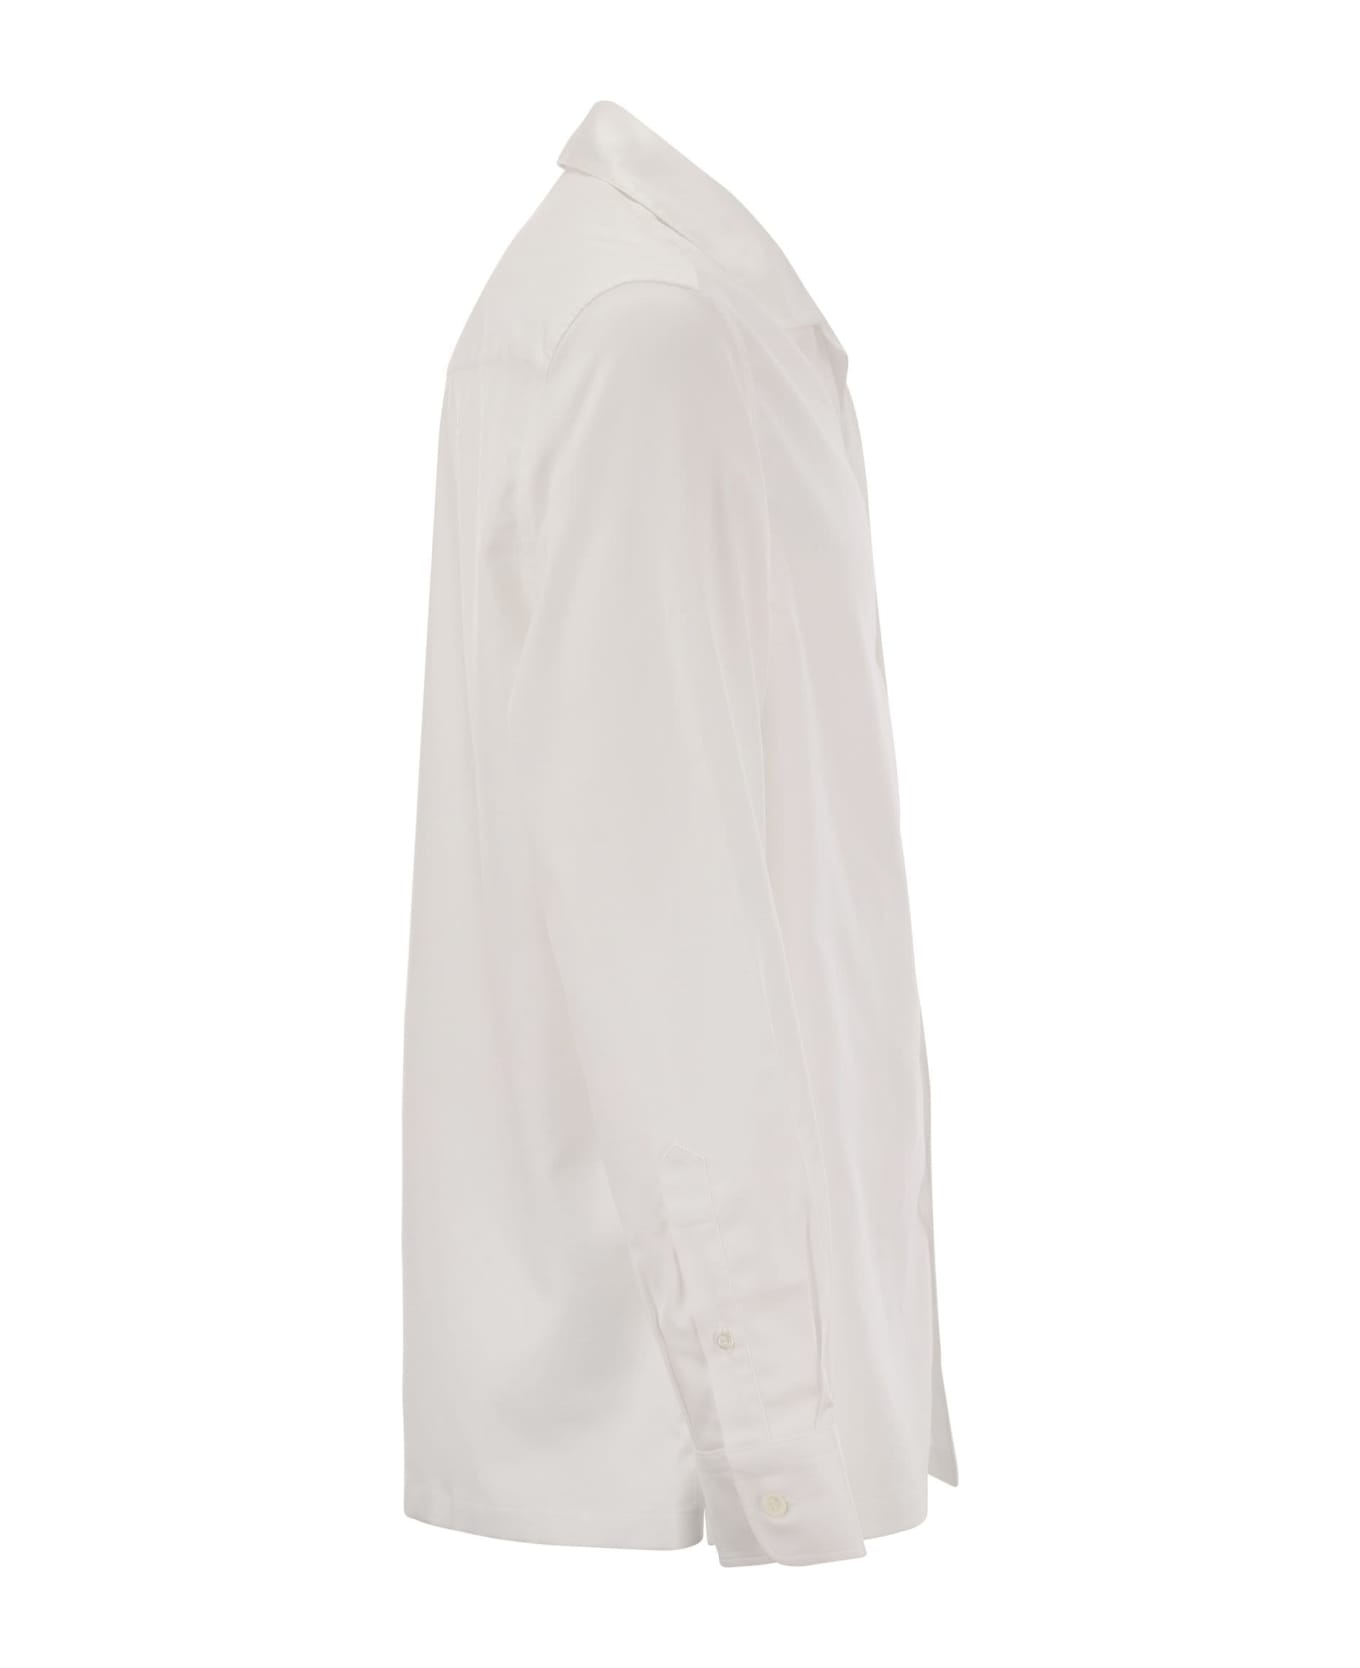 Brunello Cucinelli Classic Easy Fit Cotton Shirt - White